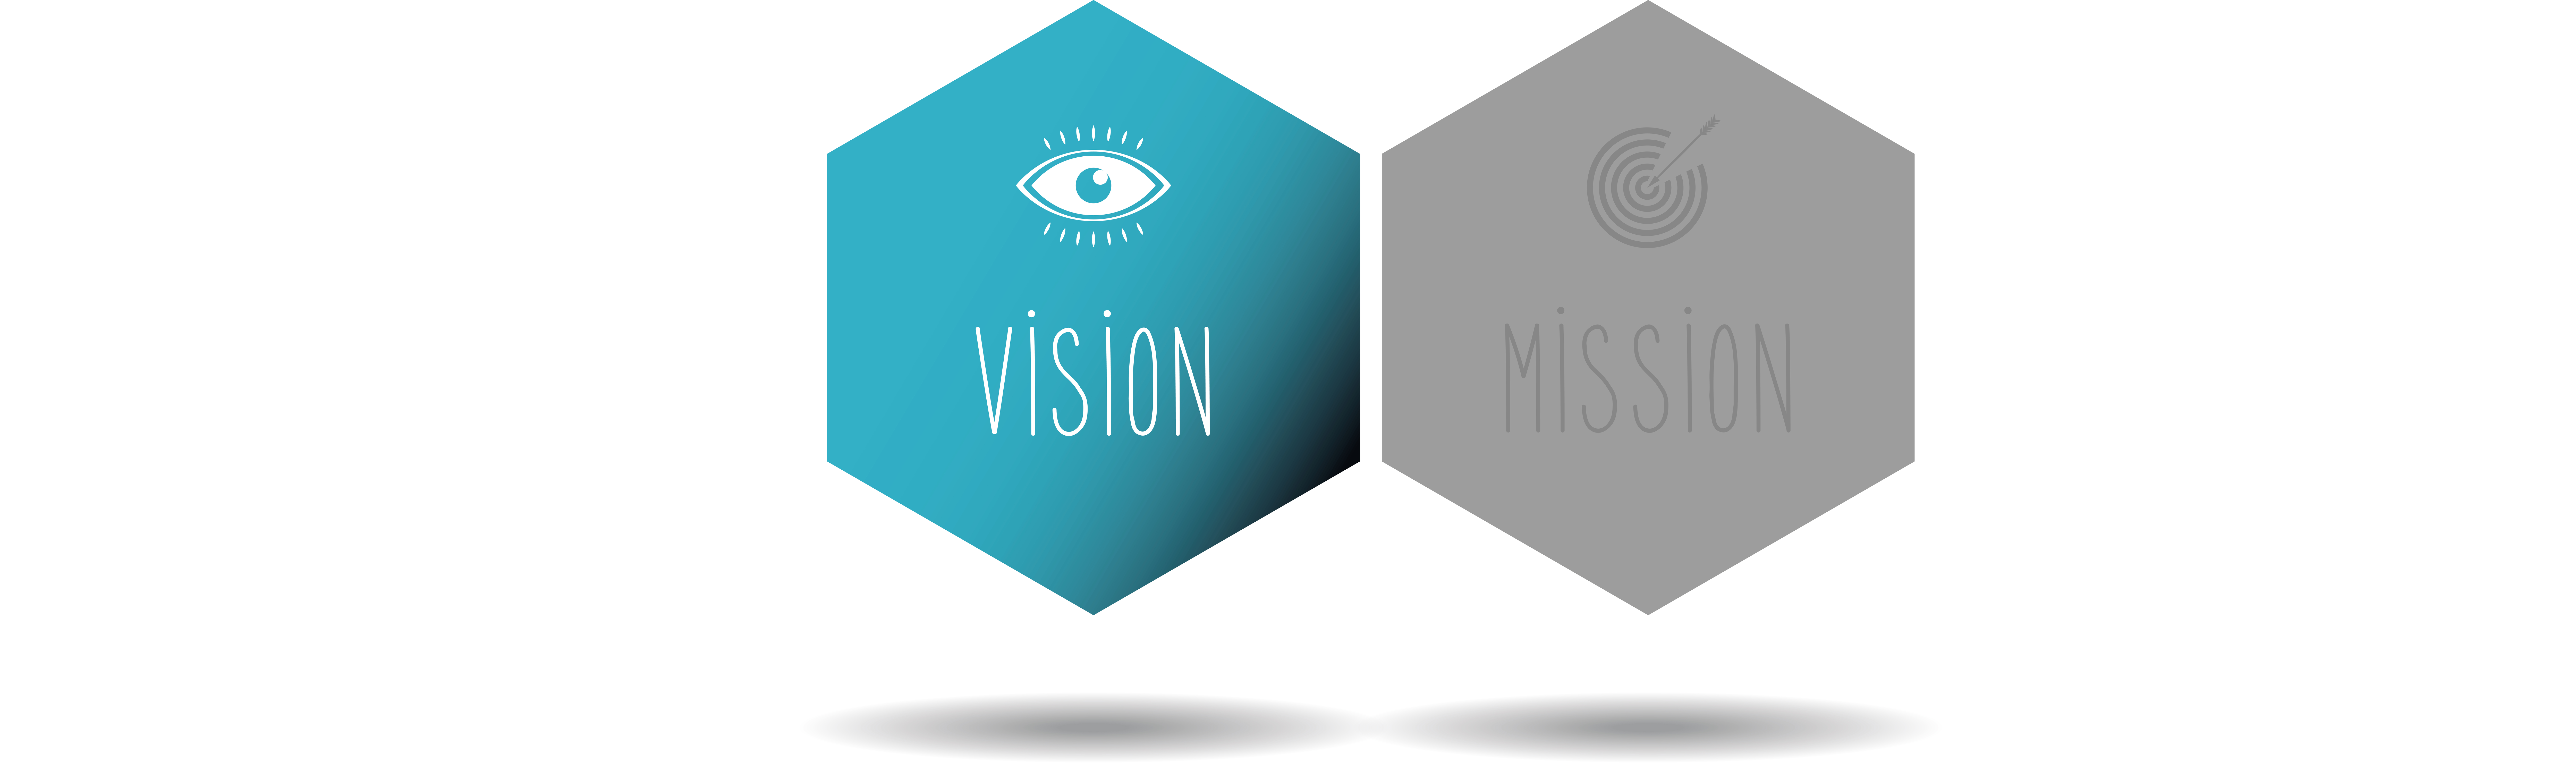 Vision-Mission